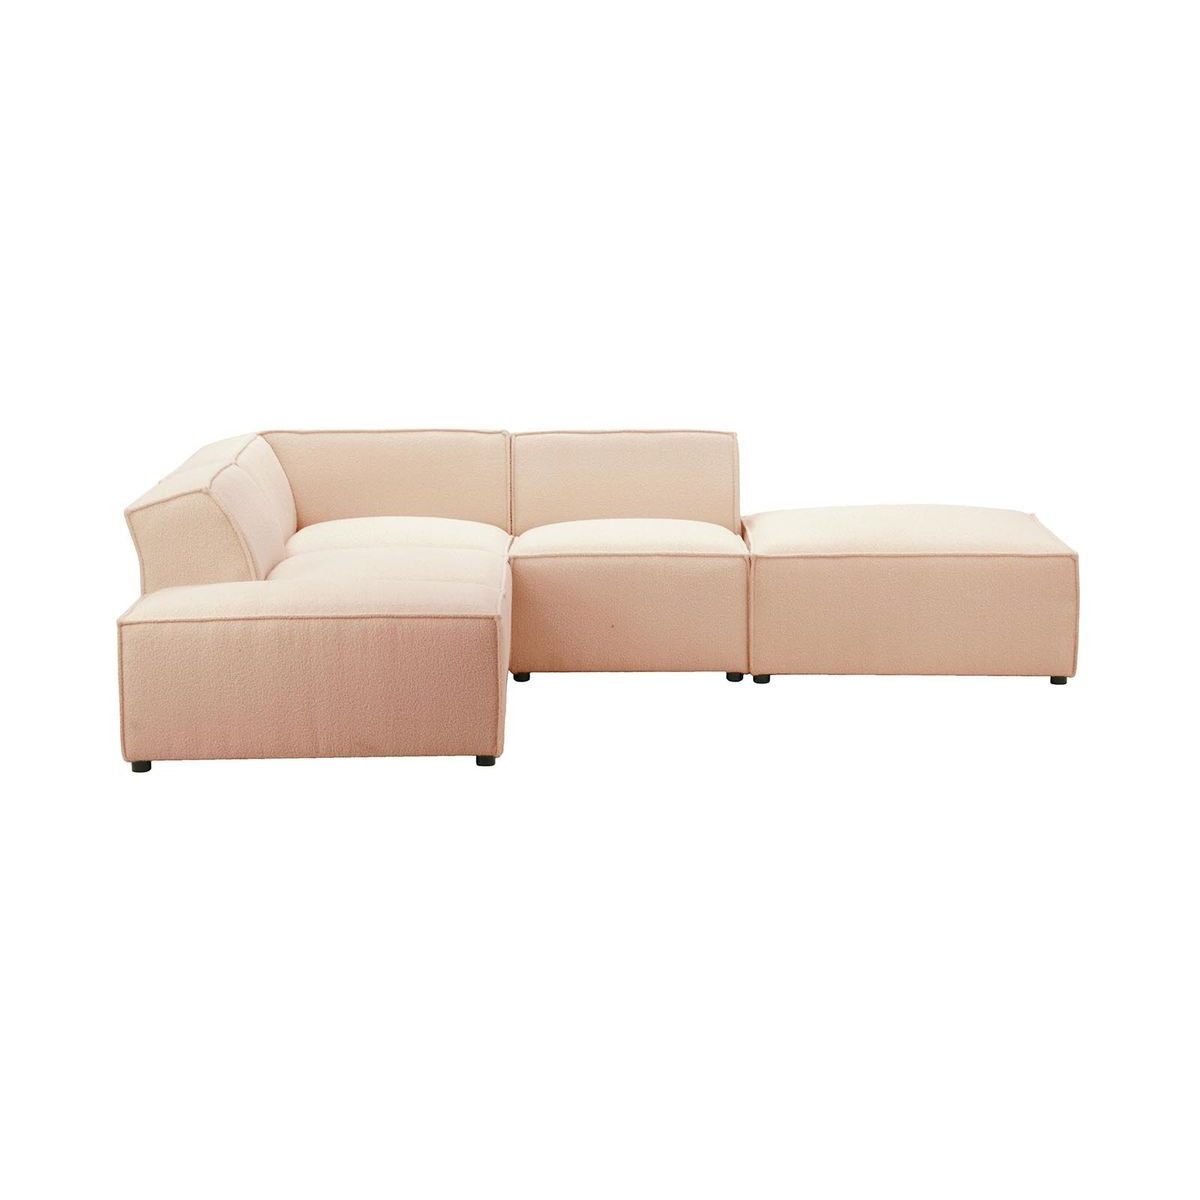 Mojo Modular Corner Sofa, boucle pink - image 1